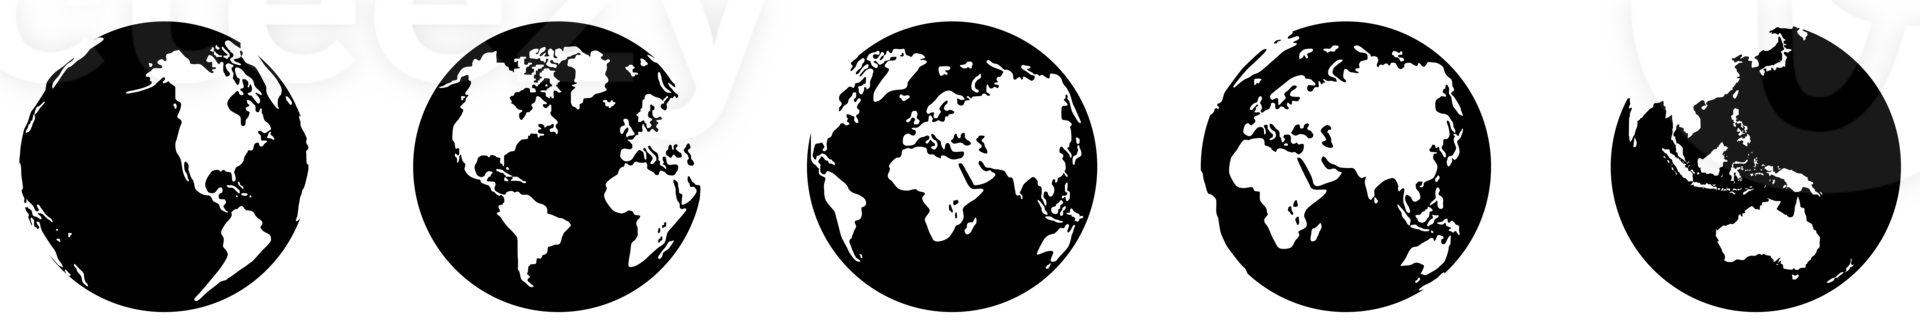 World Map on Globe Silhouette for Icon, Symbol, App, Website, Pictogram, Logo Type, Art Illustration or Graphic Design Element. Format PNG